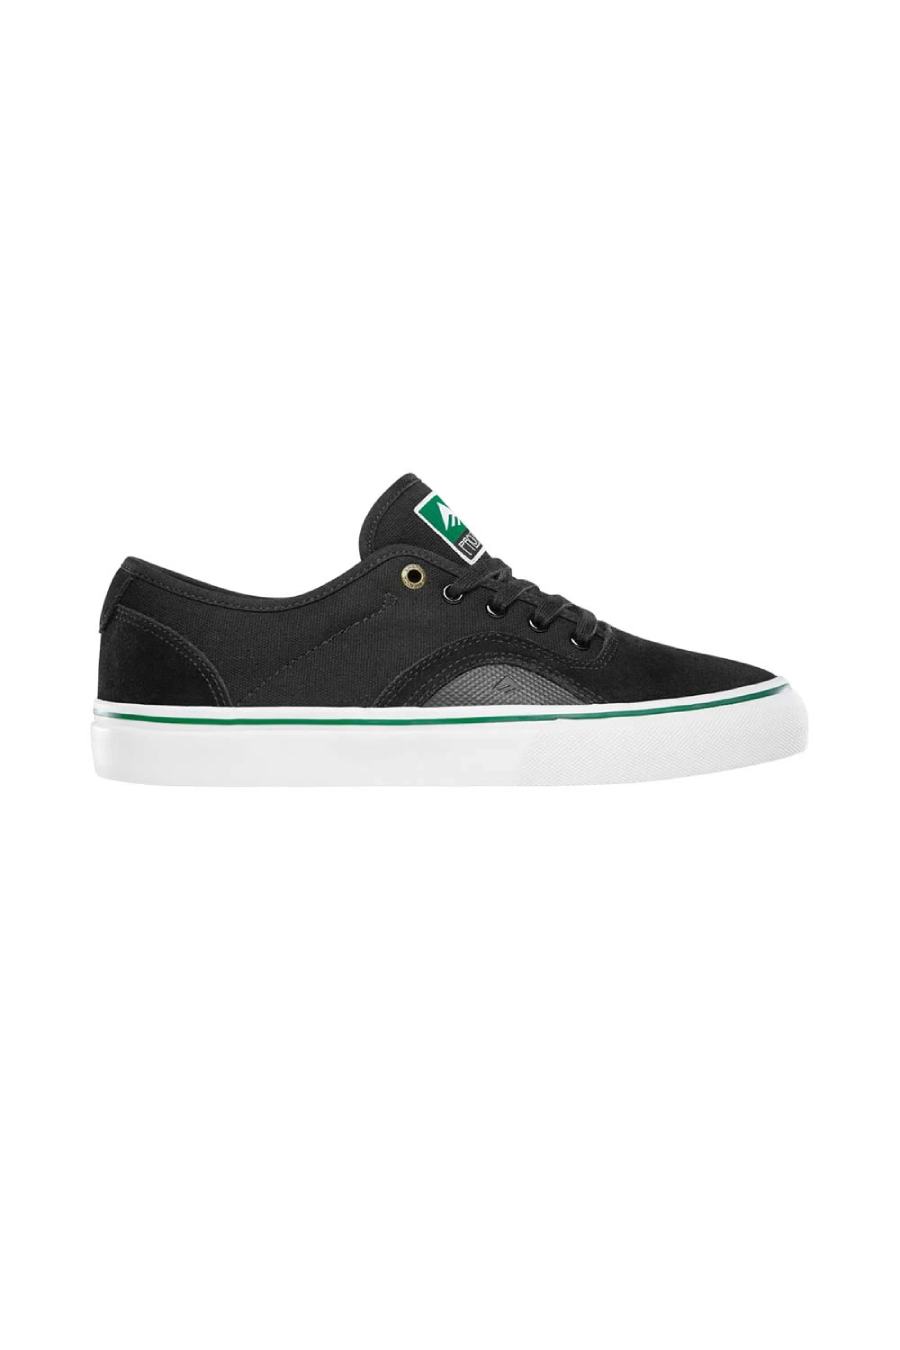 EMERICA Sneakers PROVOST G6 - BLACK-EMERICA260032000-323-BLACK 27611